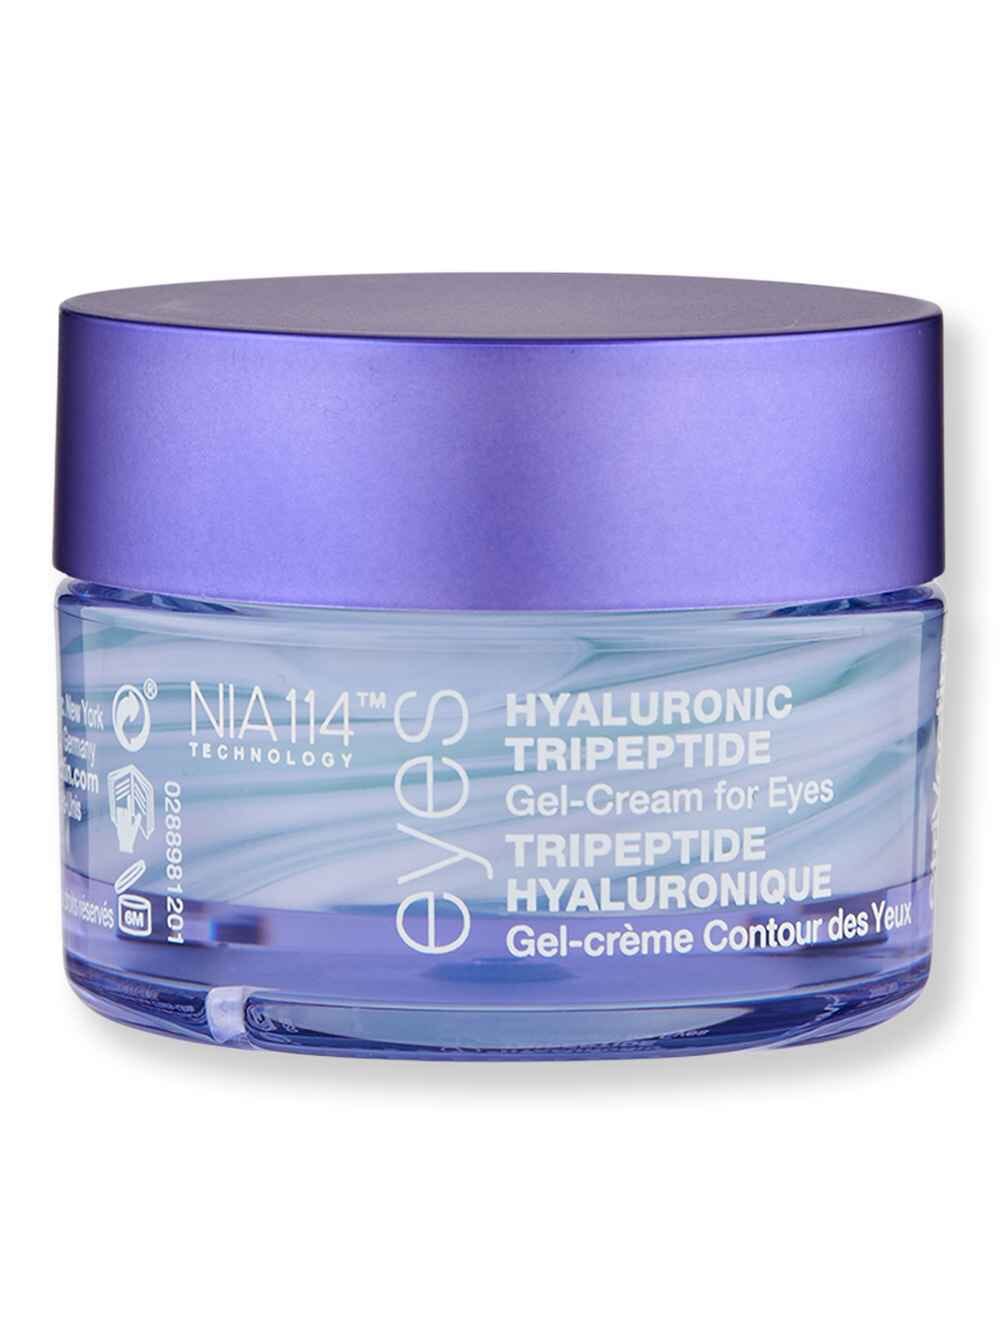 Strivectin Strivectin Hyaluronic Tripeptide Gel-Cream for Eyes 0.5 oz15 ml Eye Gels 